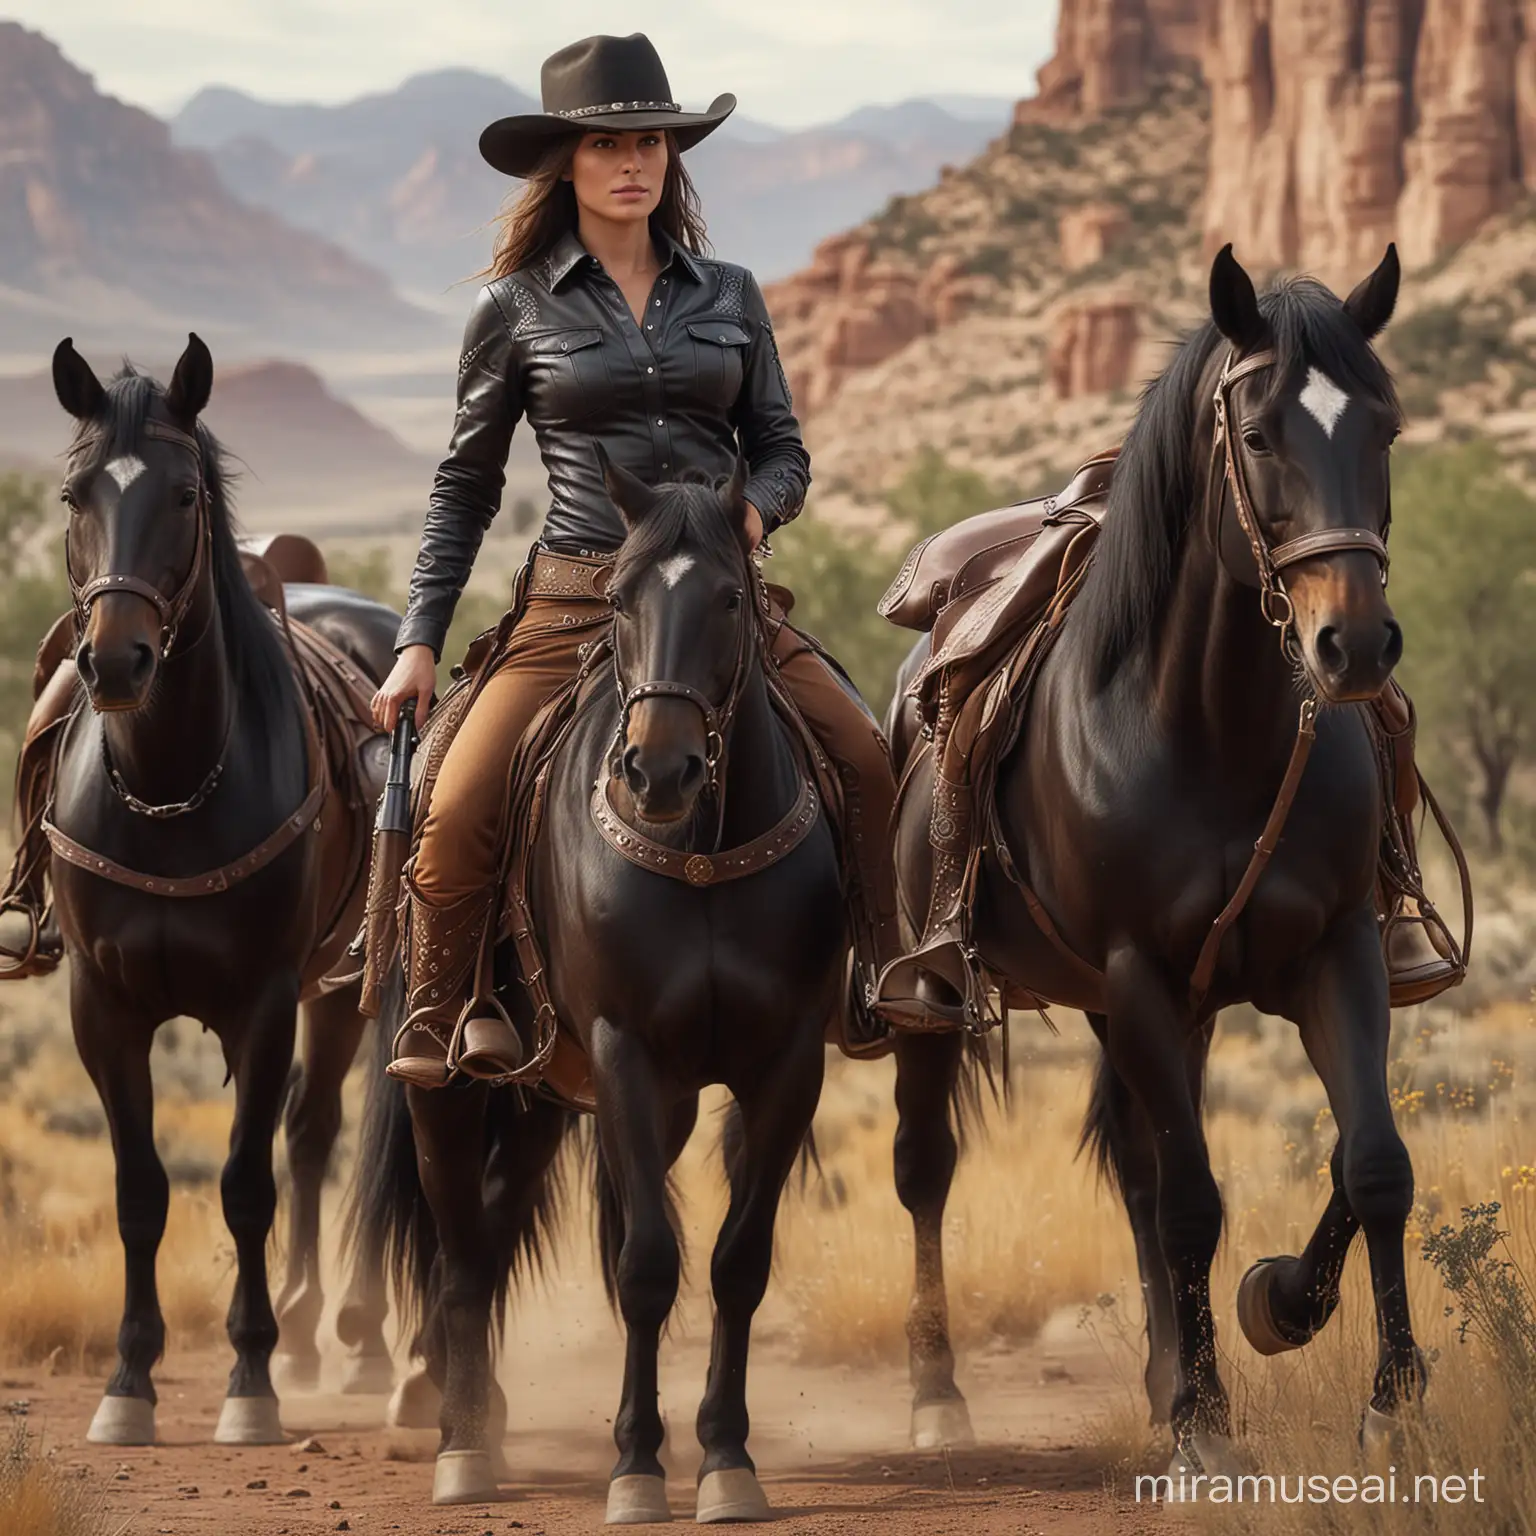 Dark Leather Cowgirl Leading Black Horse in Cowboy Art Style Portrait